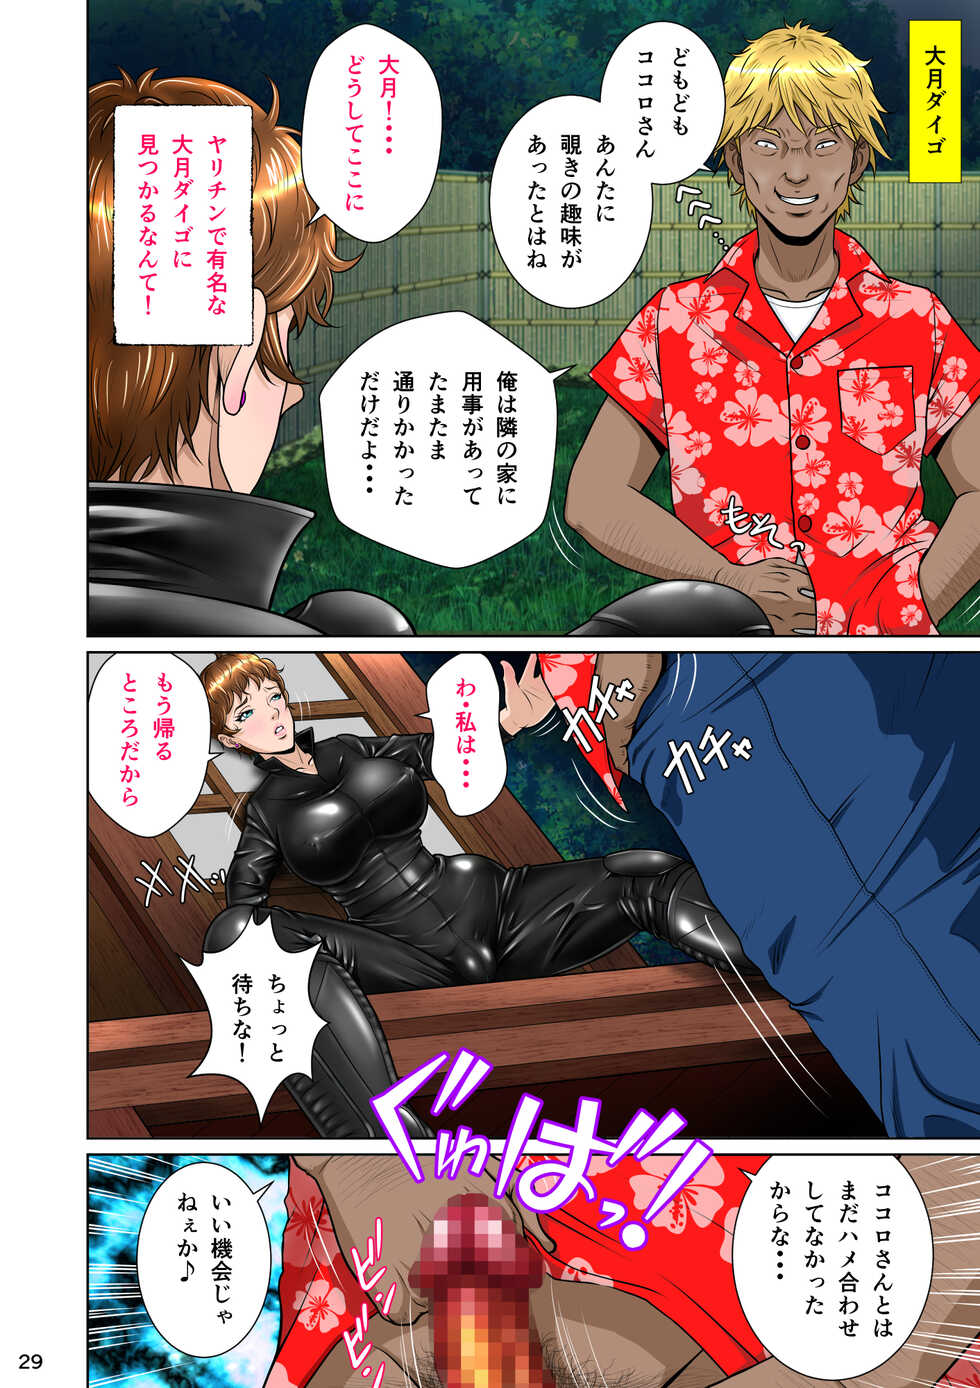 [NTR System] Kakine Tsuma II Episode 2 - Page 39